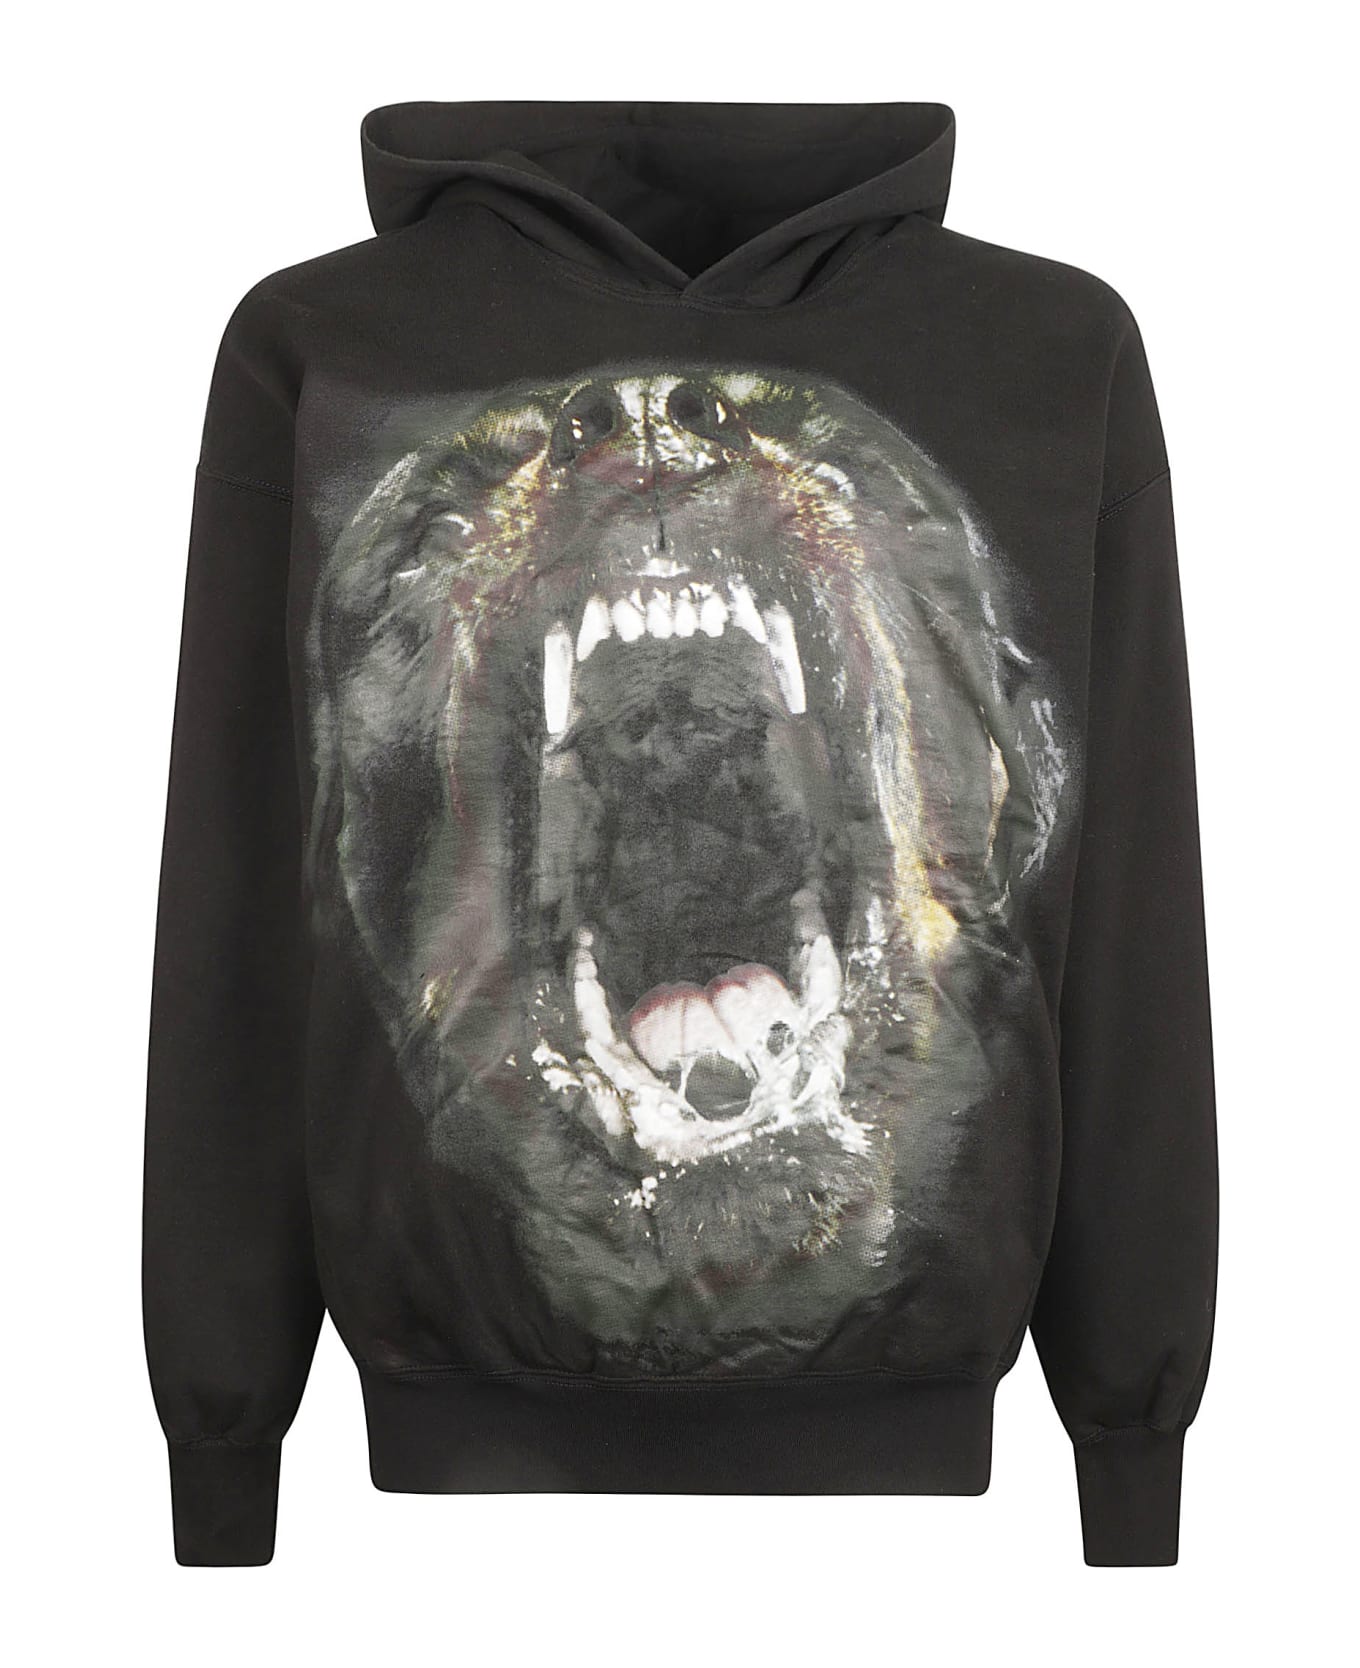 1989 Studio Rottweiler Hooded Sweatshirt - Black